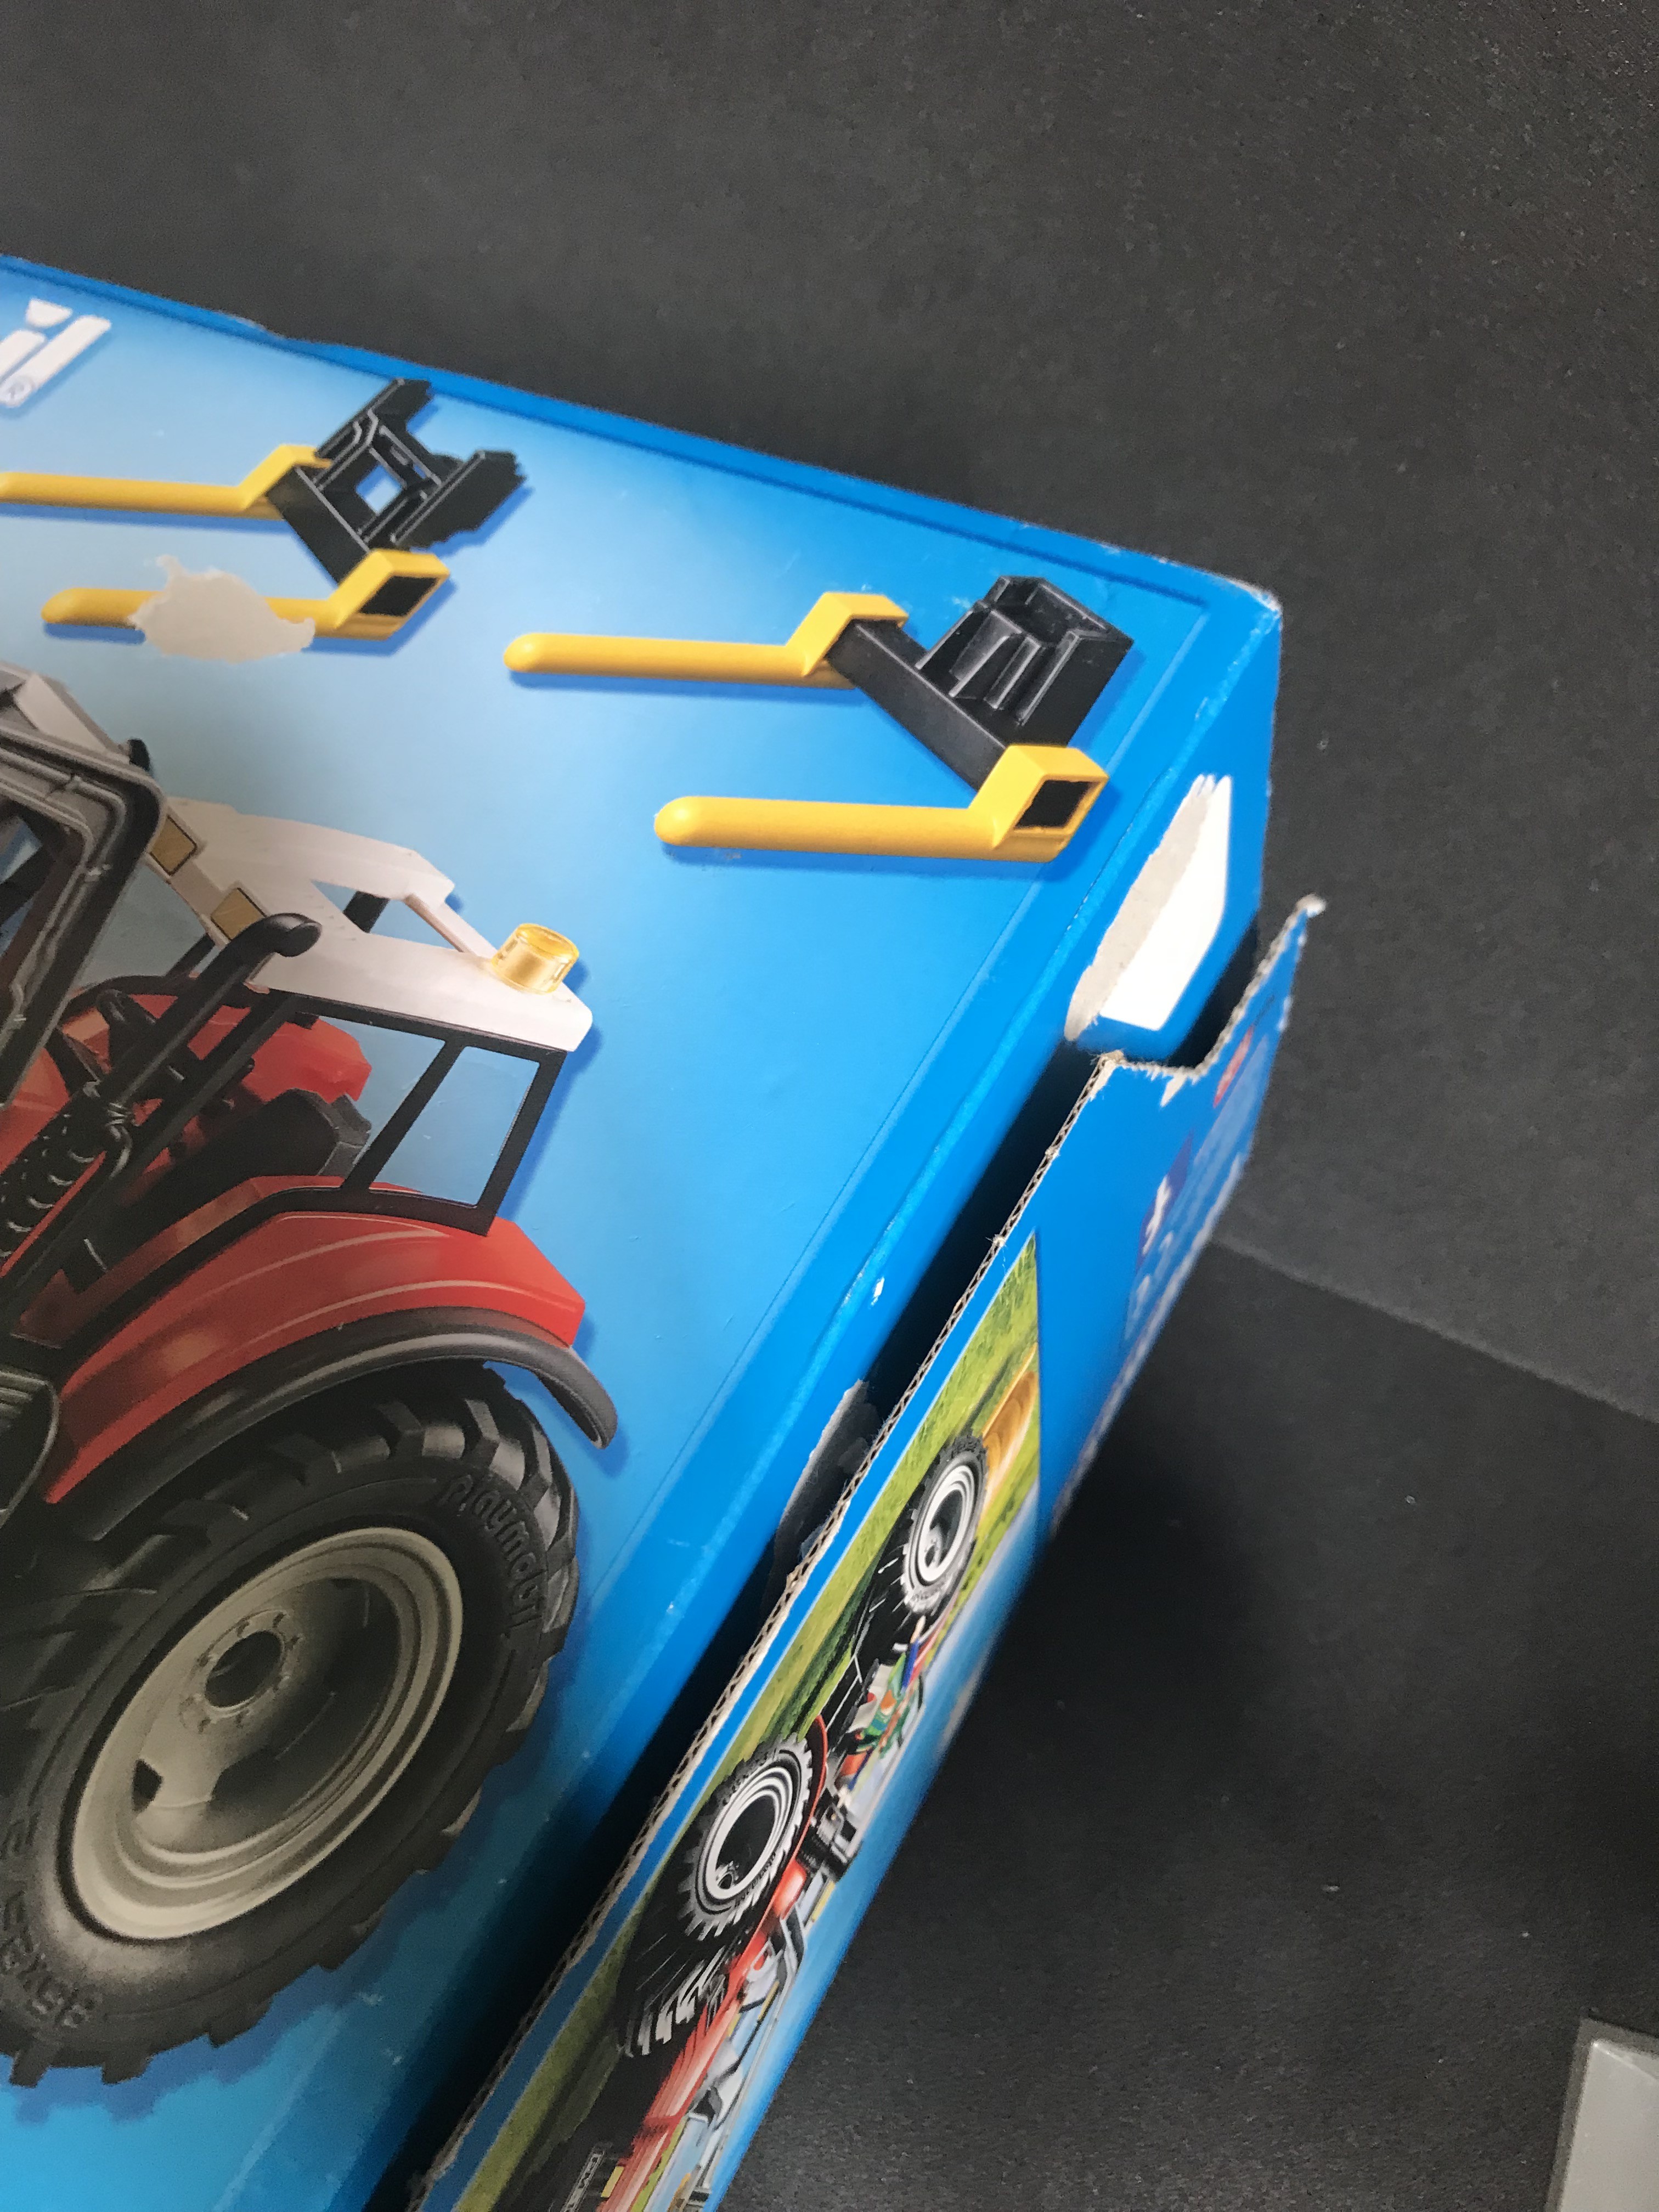 Tracteur Playmobil